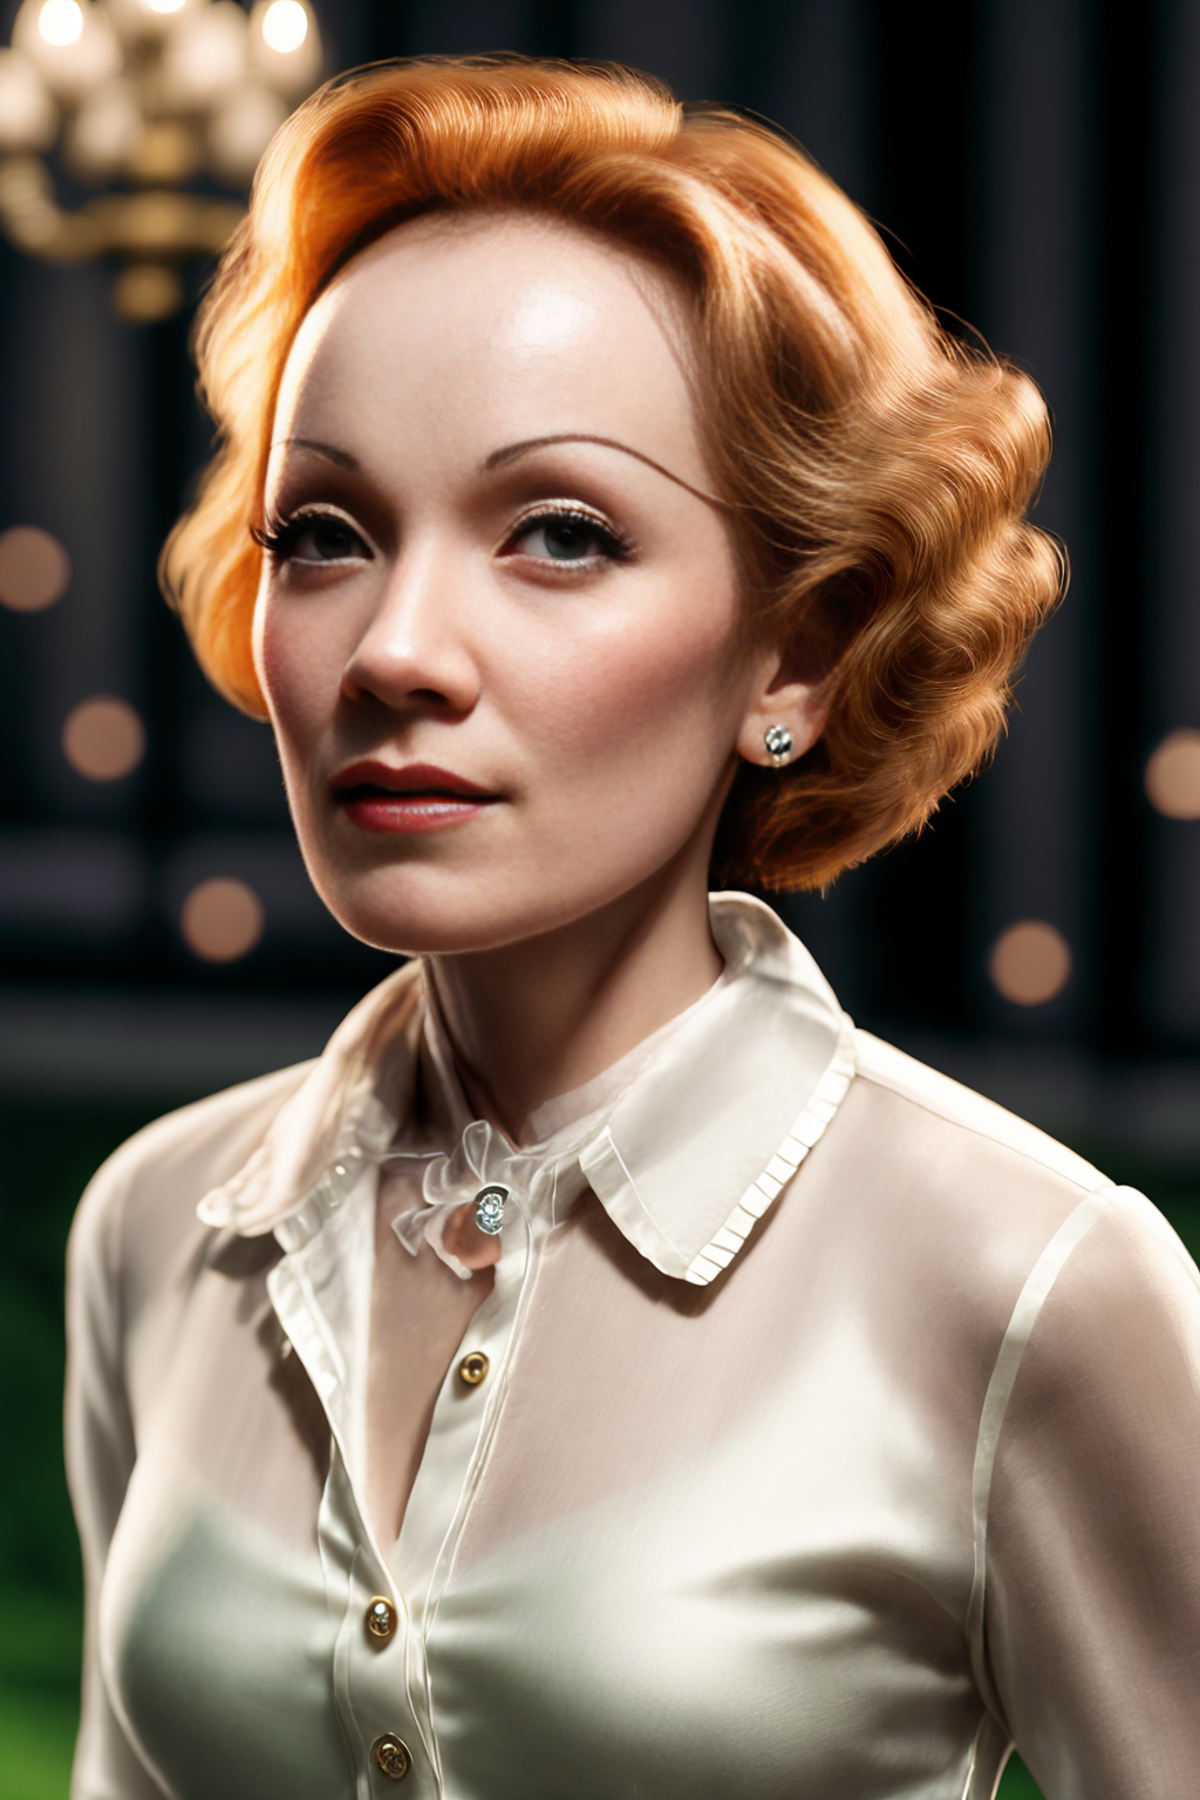 Marlene Dietrich image by Wiggin